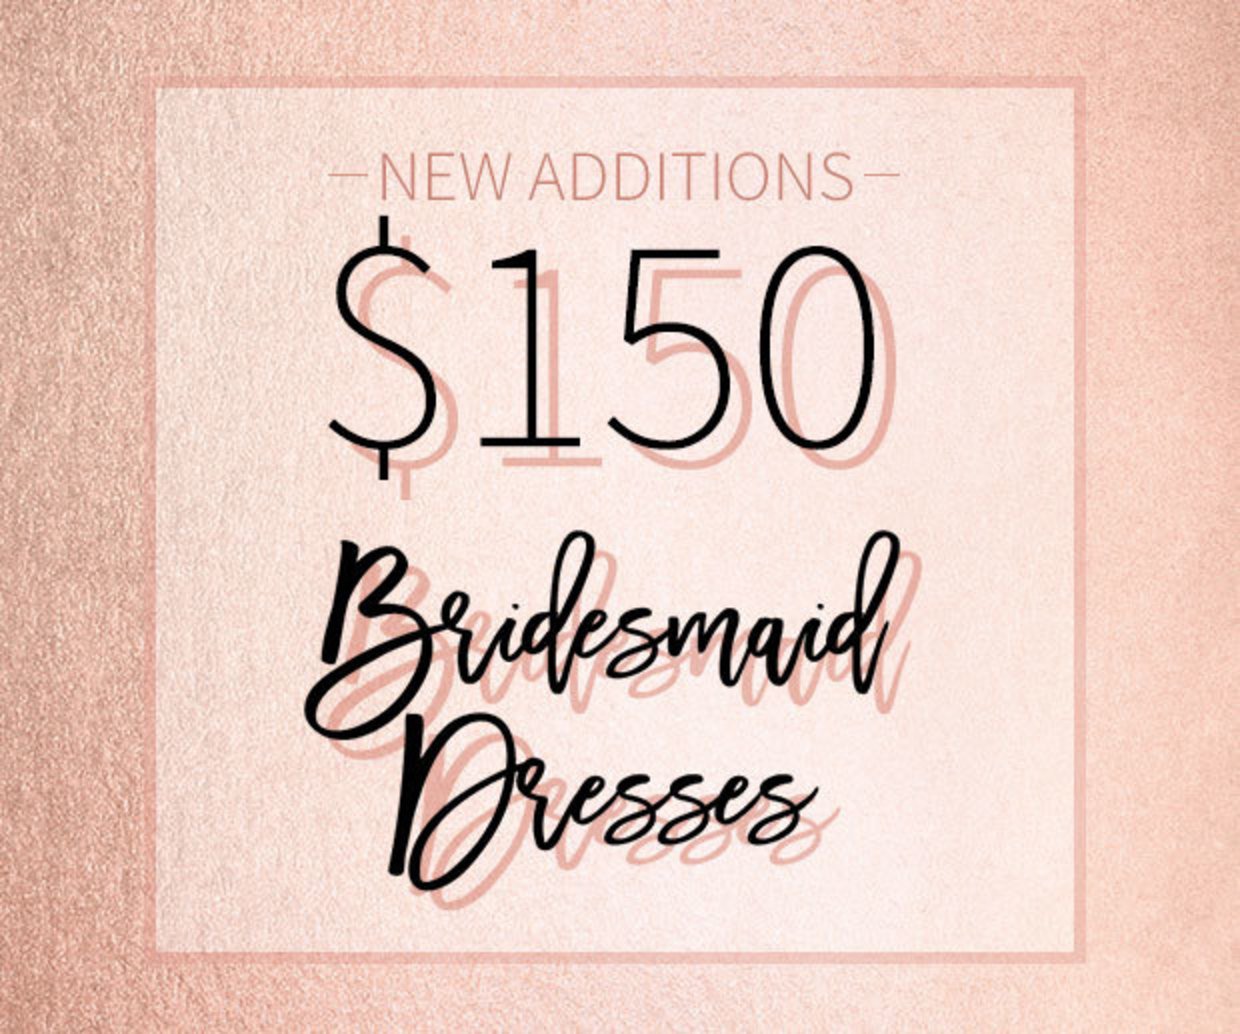 New Additions - $150 Bridesmaid Dresses